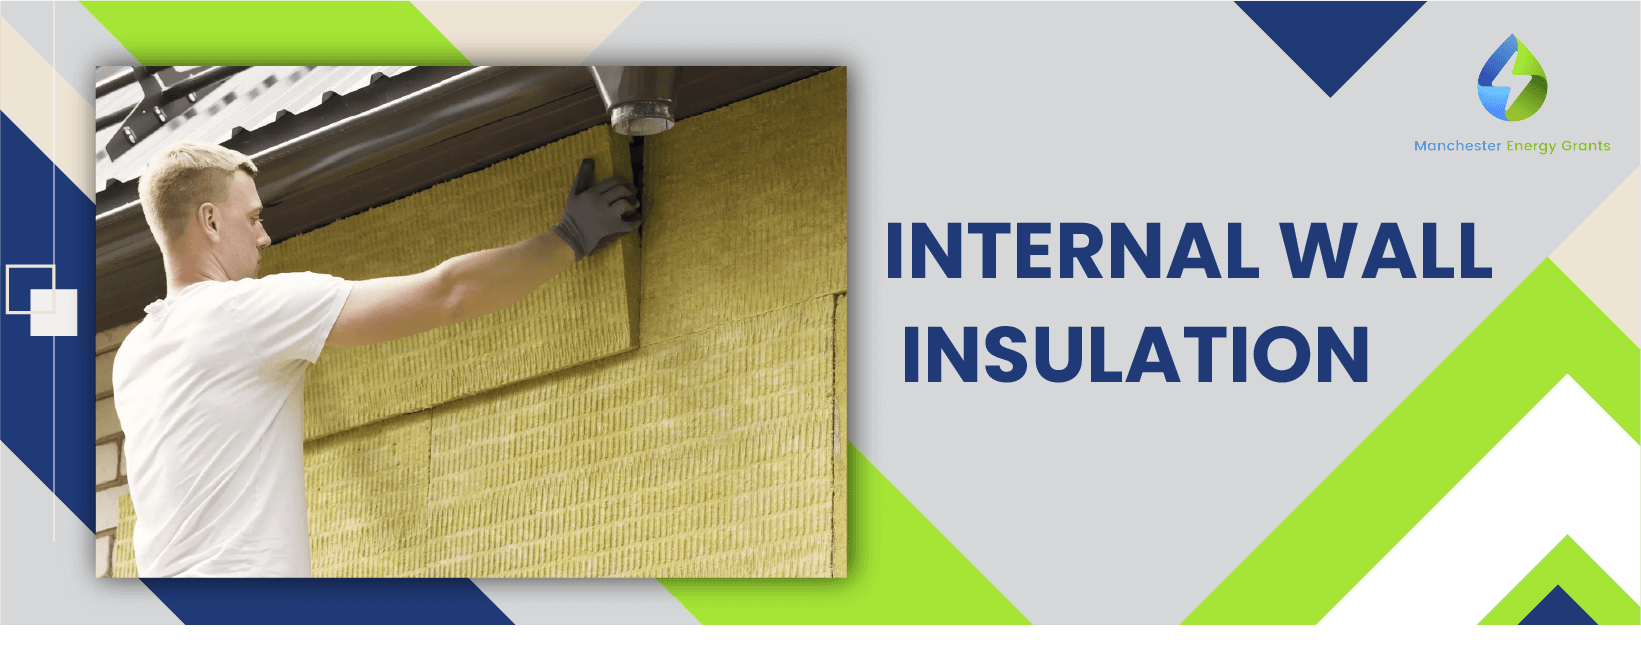 Purpose of Internal Wall Insulation